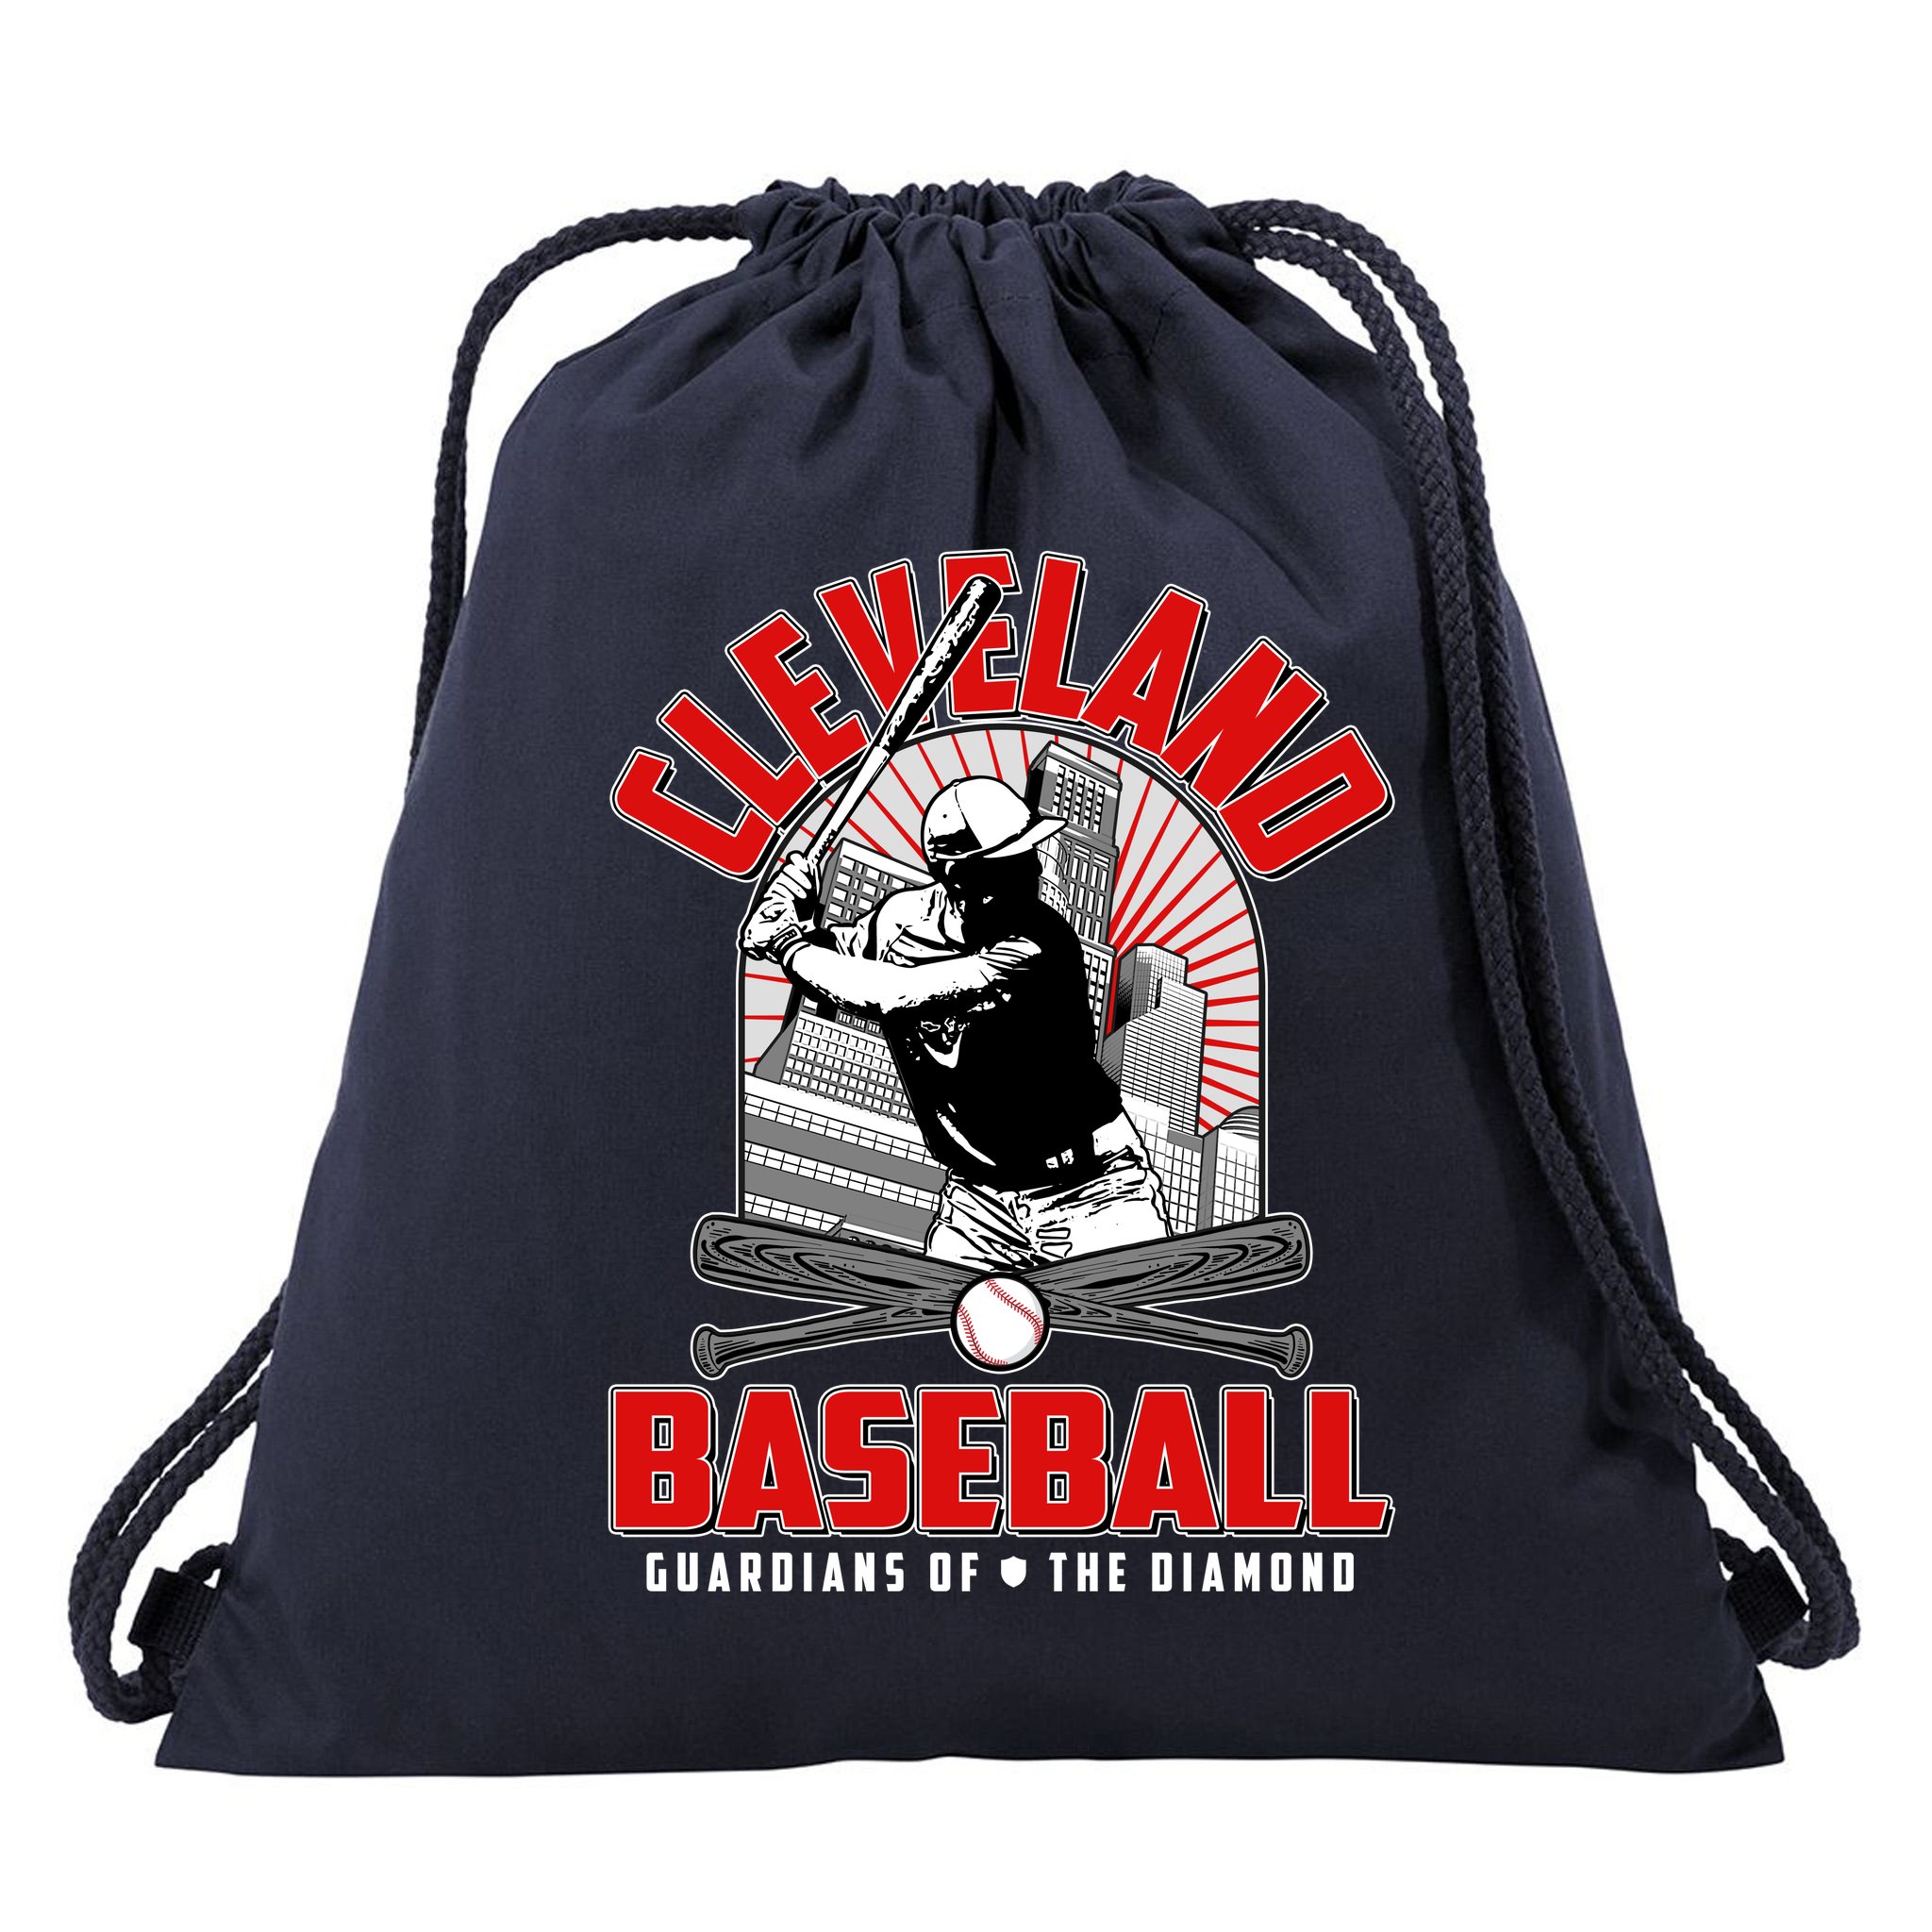 Baseball Draw String Bag Personalized